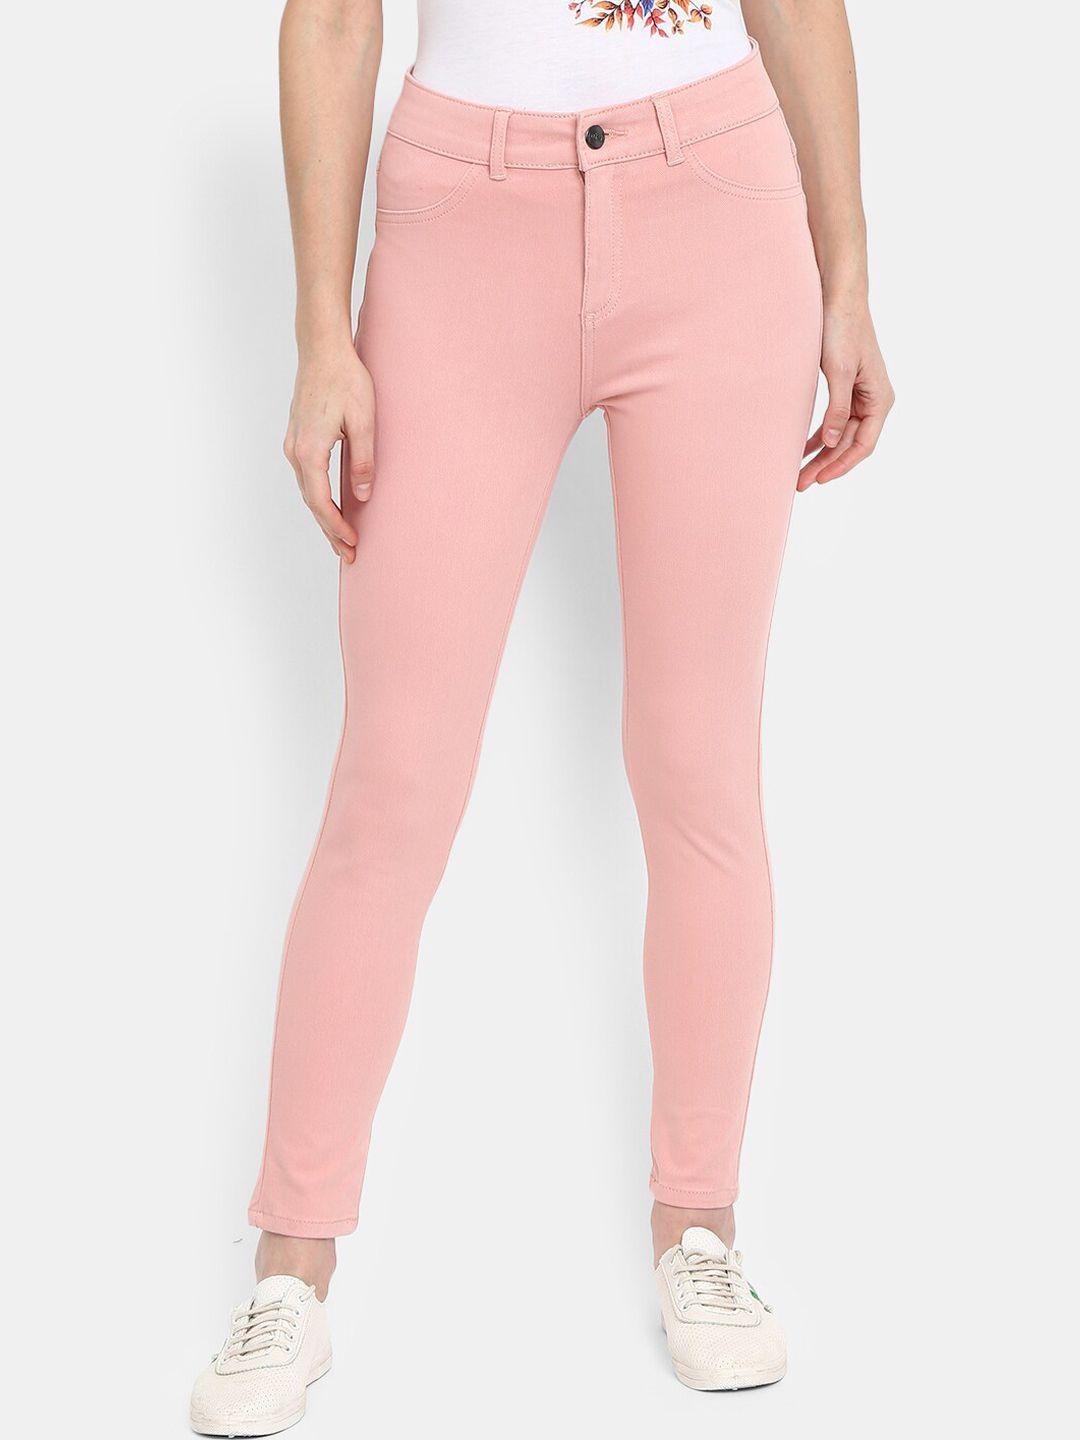 v-mart women pink trousers